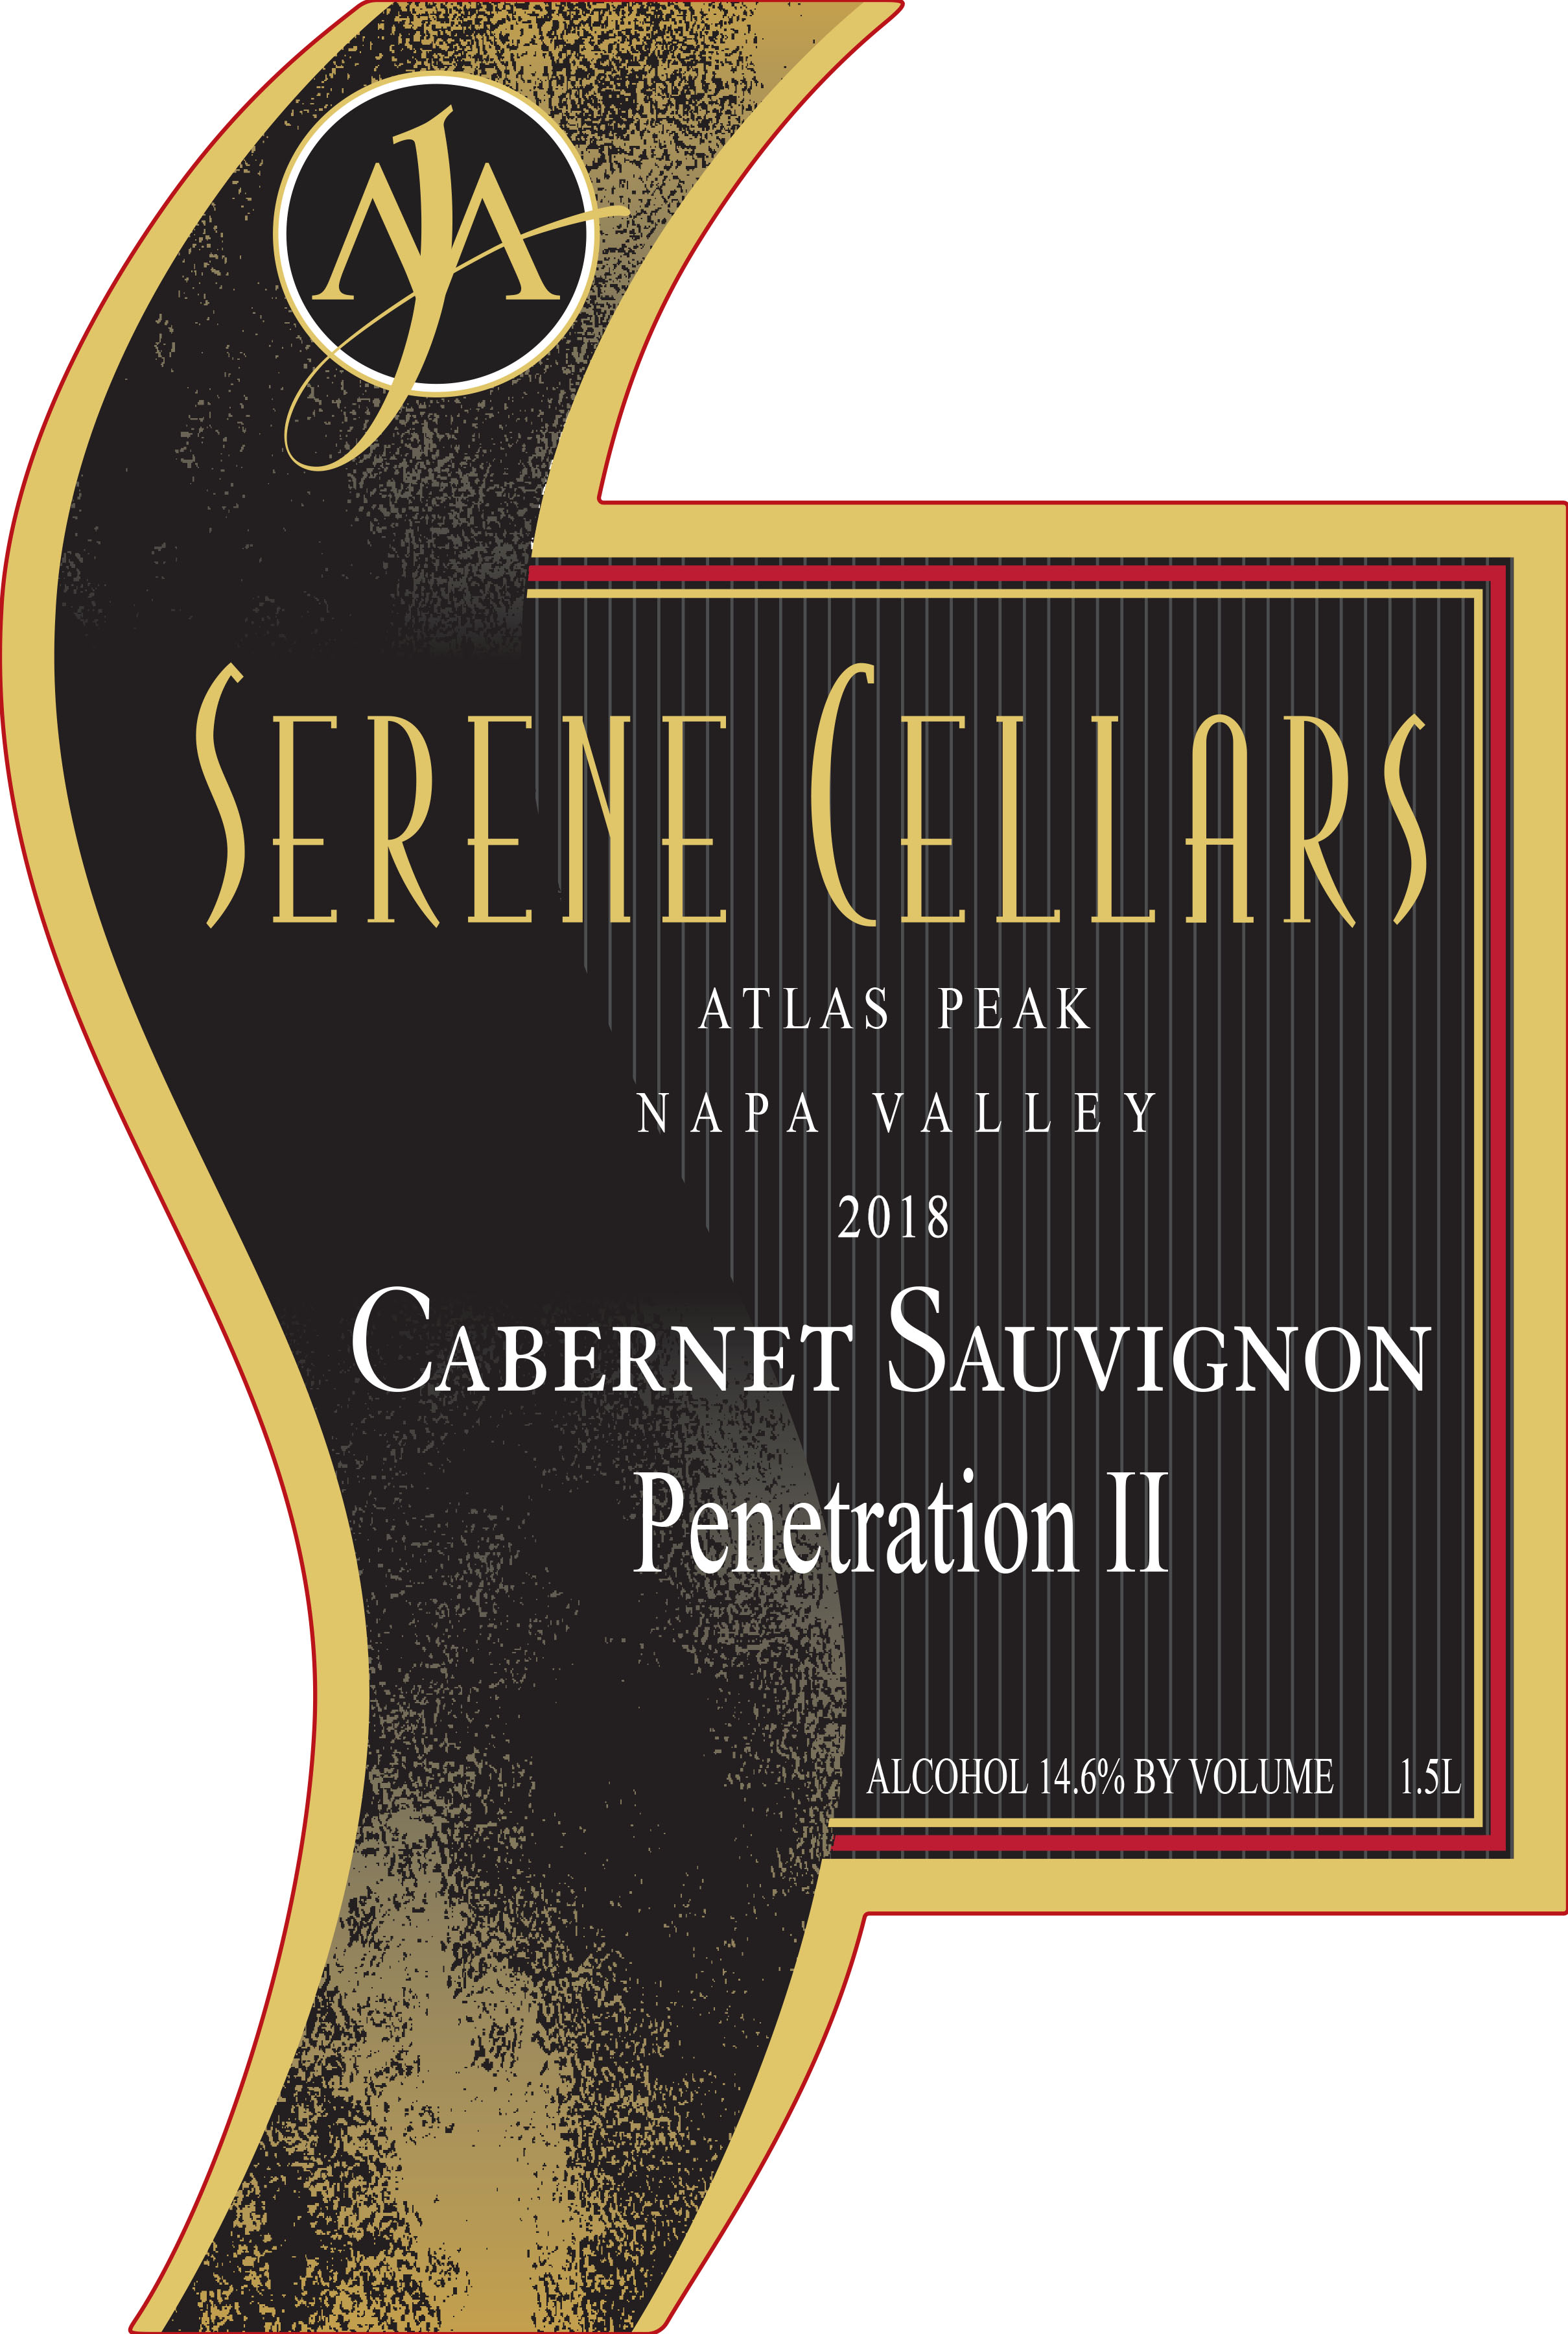 Product Image for 2018 Atlas Peak Cabernet Sauvignon "Penetration II" 1.5L